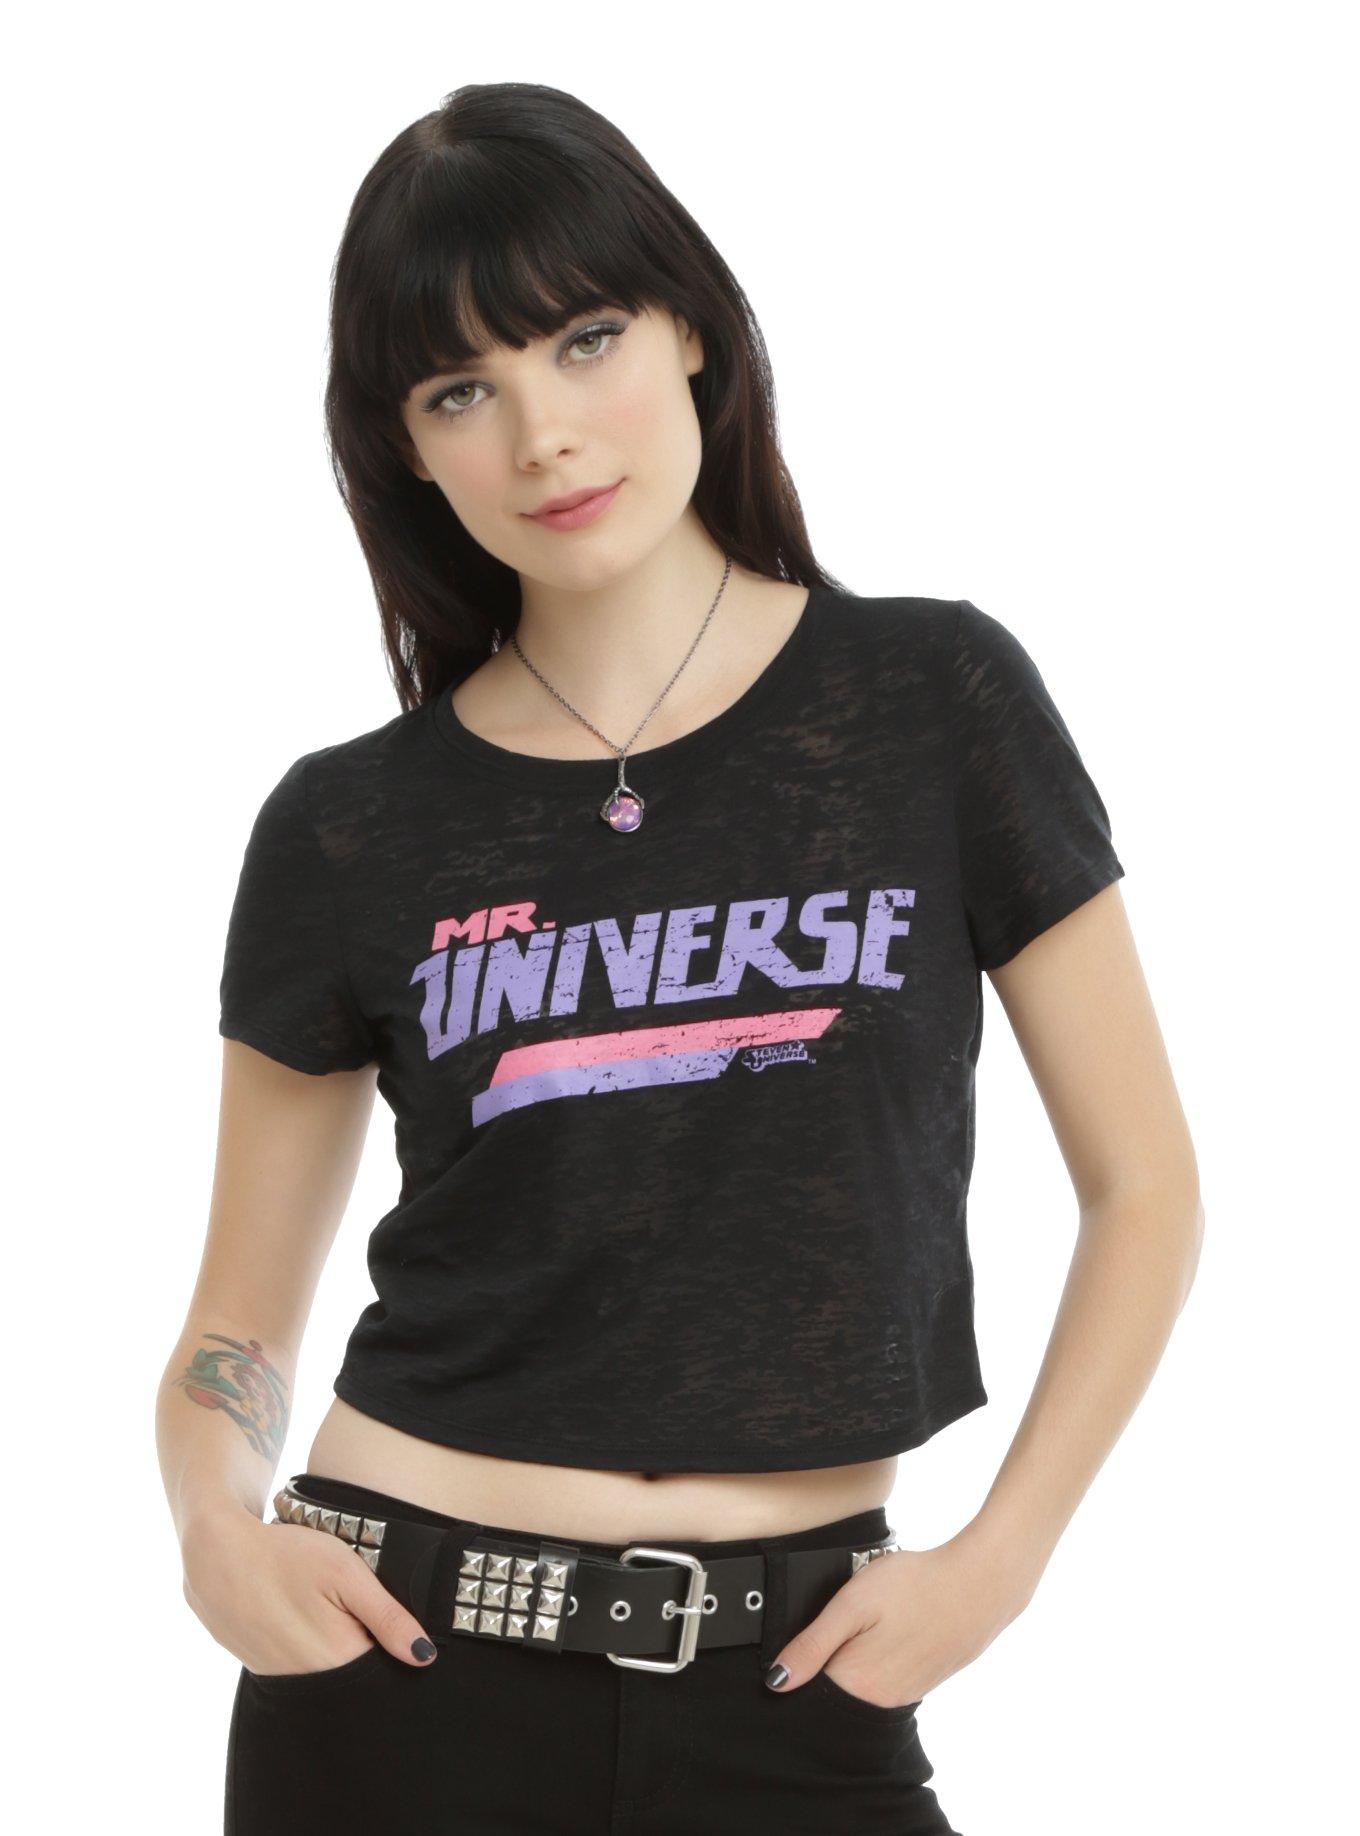 Cartoon Network Steven Universe Mr. Universe Girls T-Shirt, BLACK, hi-res